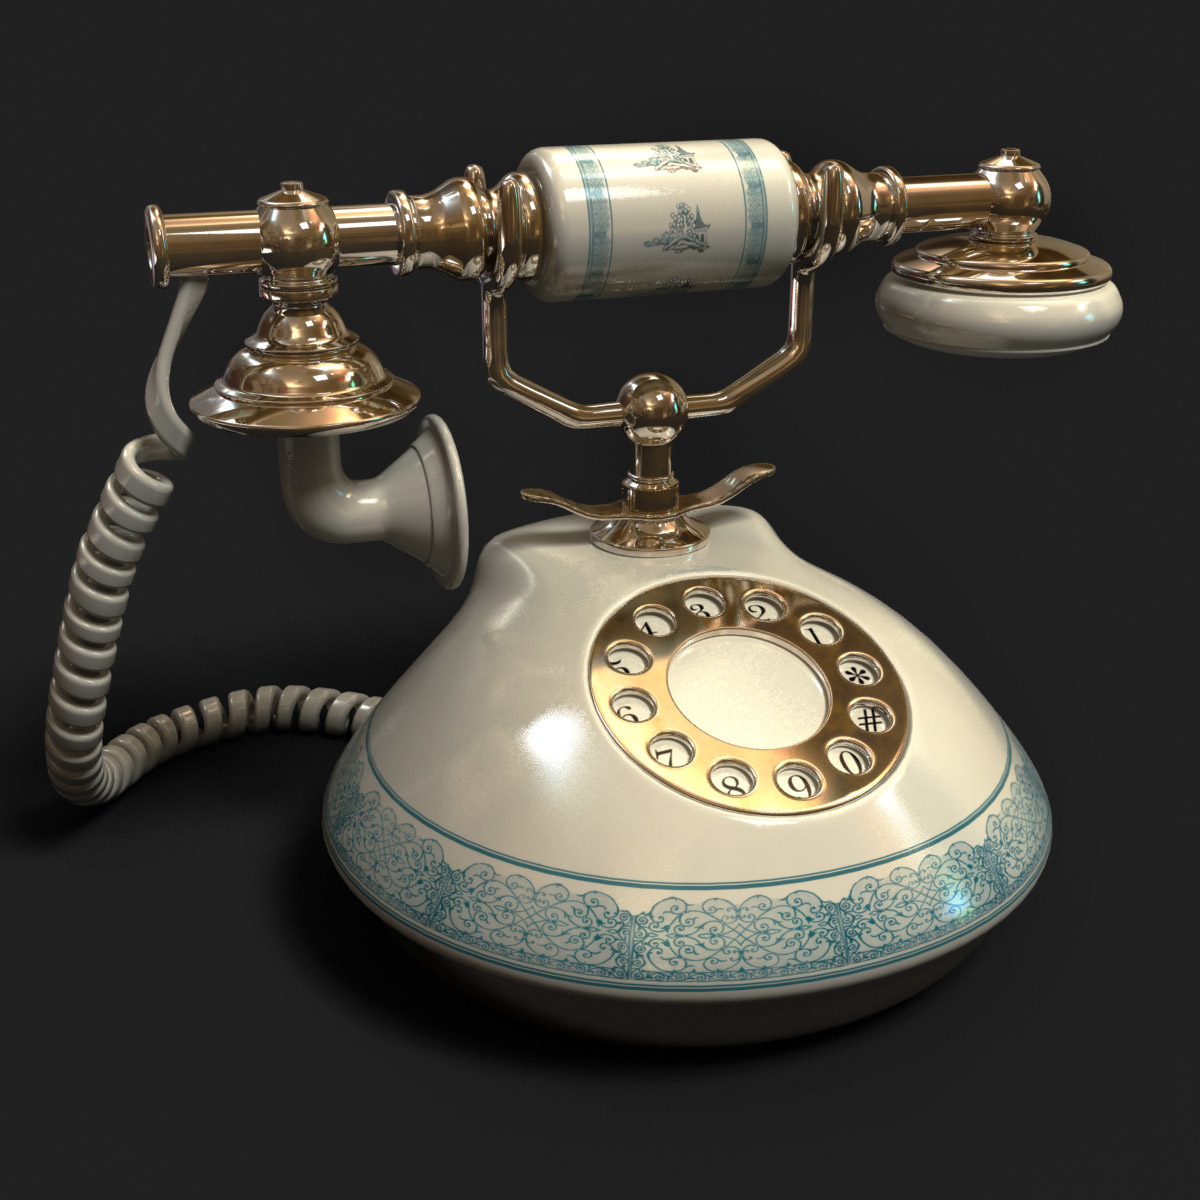 Тема старого телефона